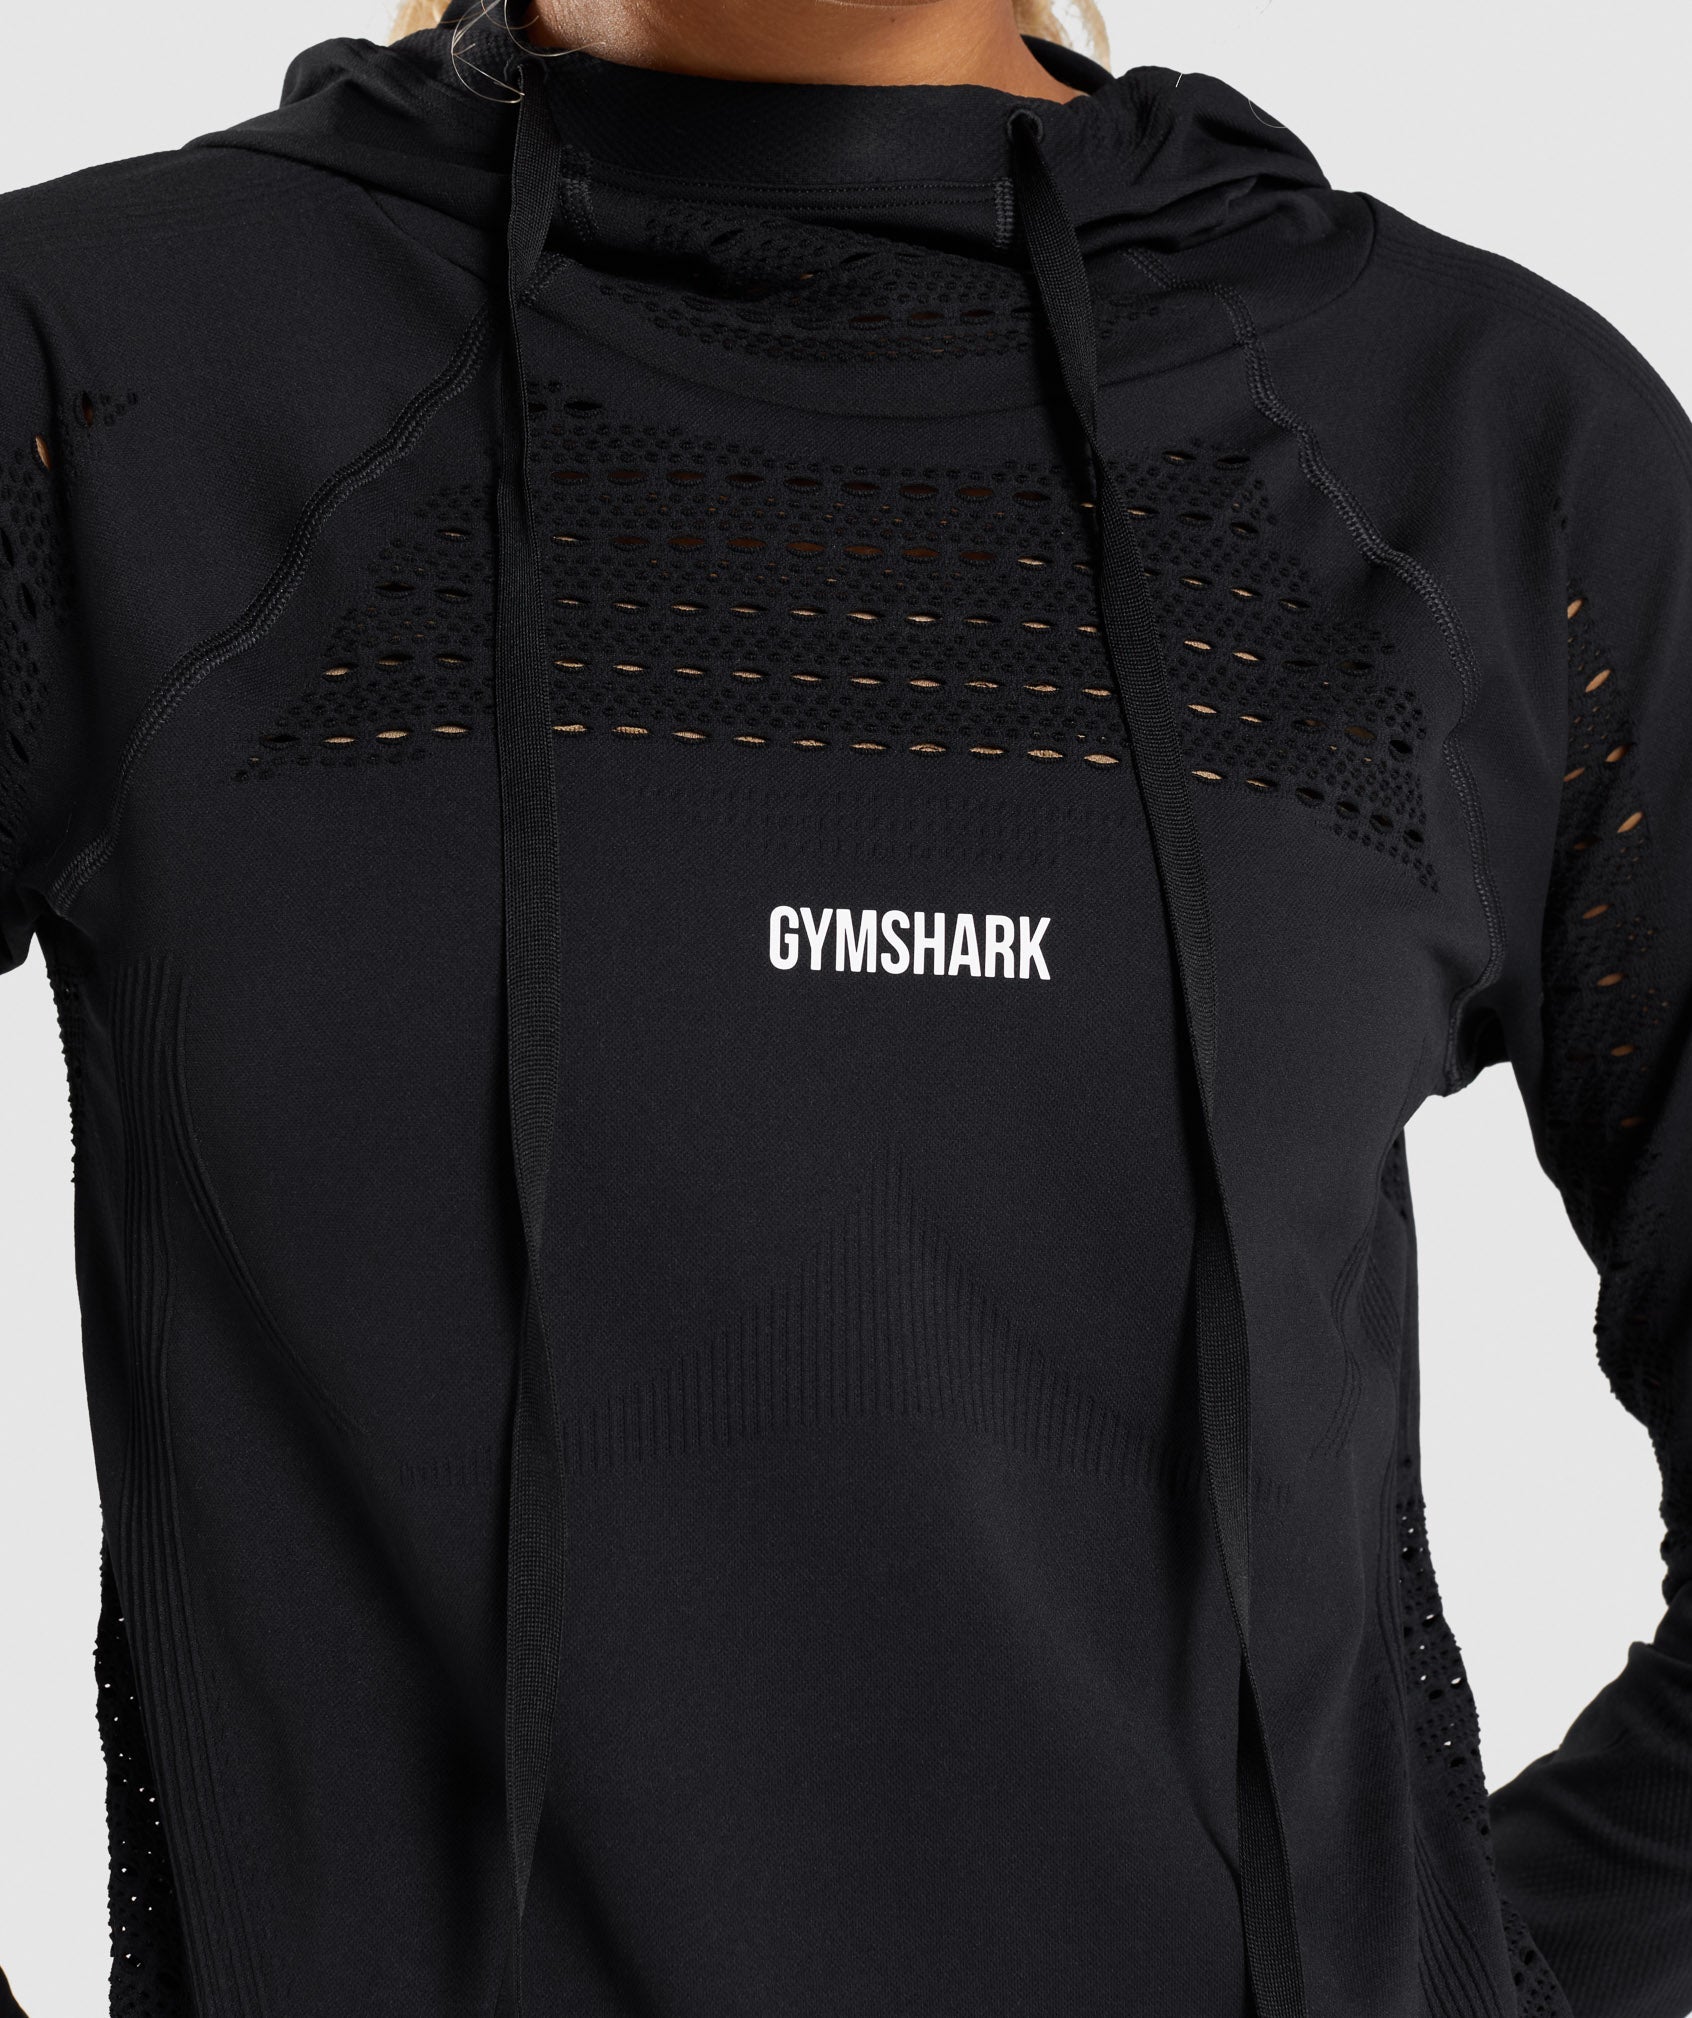 Gymshark Hoodie Sweatshirt Women's S Black Logo